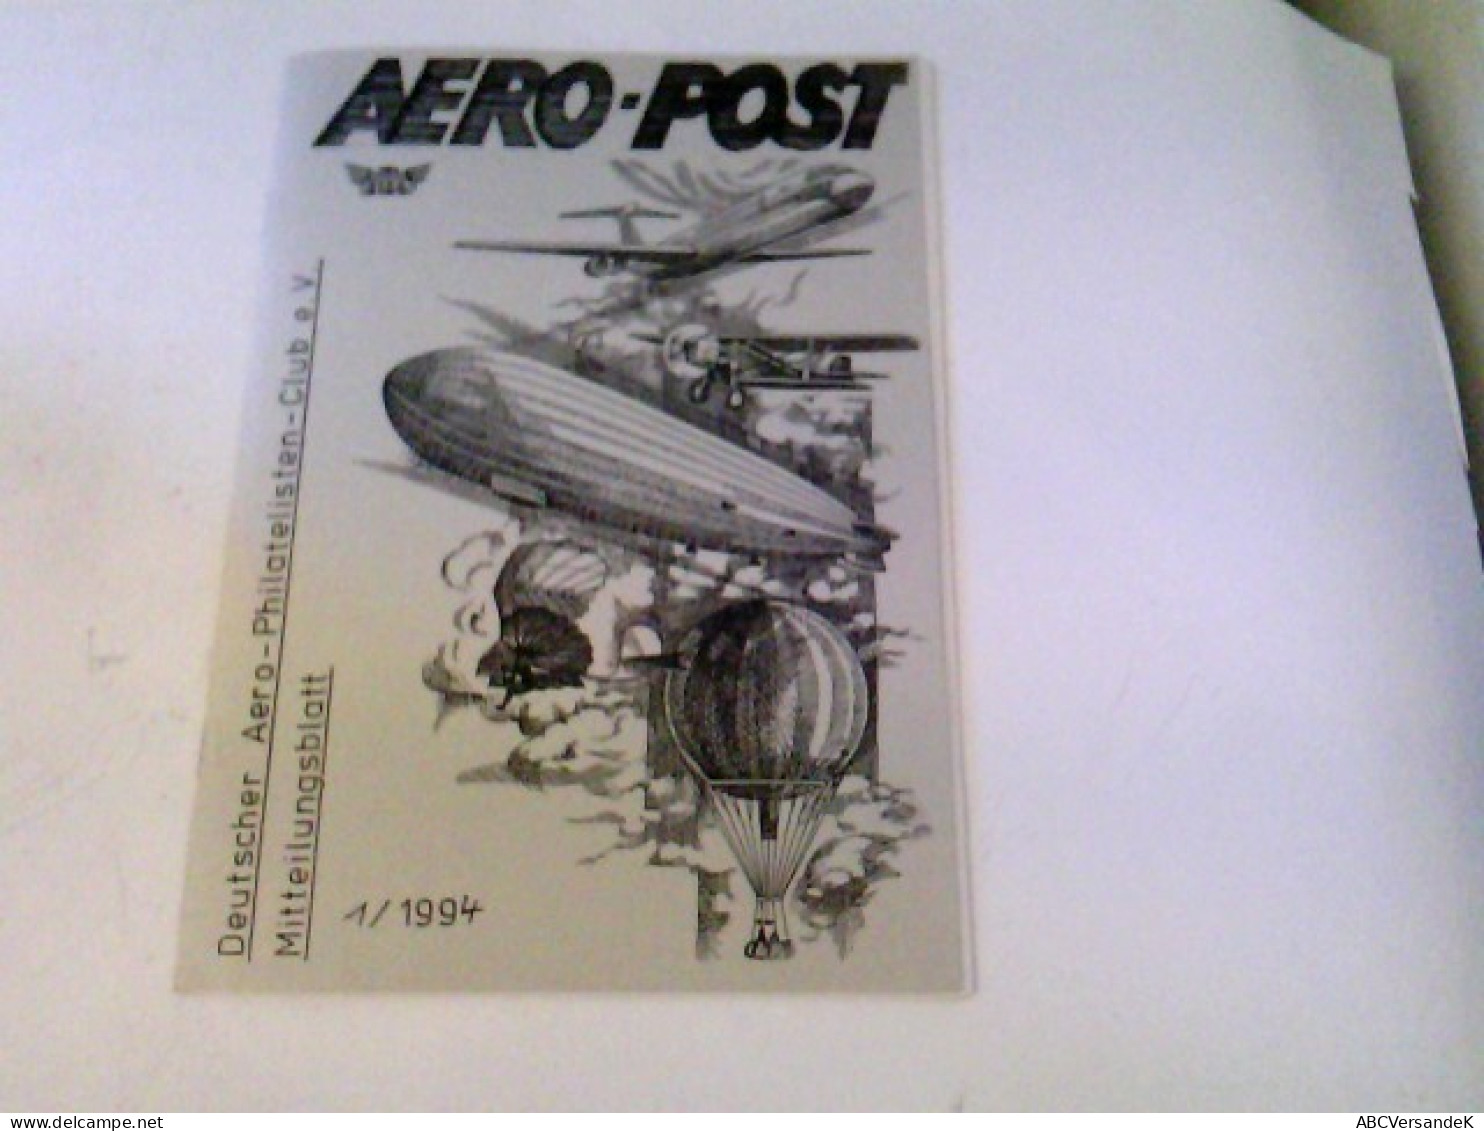 AERO-POST 1/1994 Mitteilungsblatt - Transport